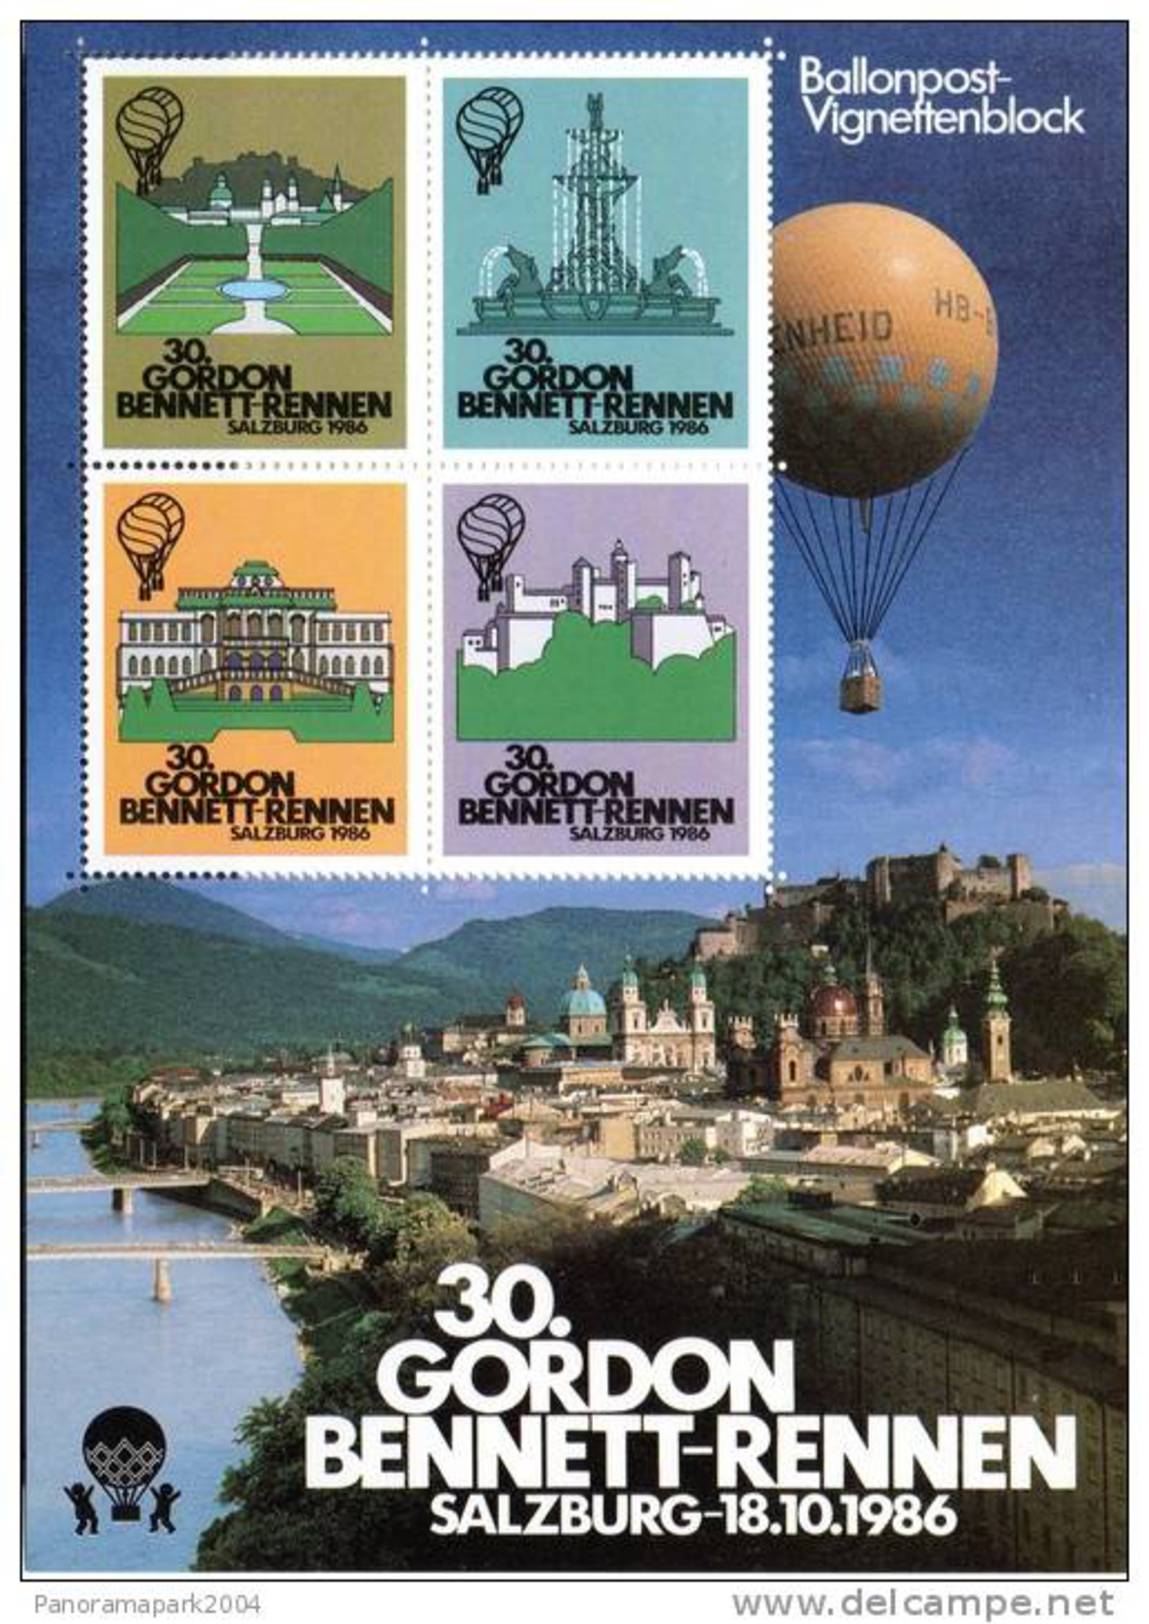 30. Gordon Bennett Rennen Salzburg 18.10.1986 Österreich Vignettenblock Ballonpost Heißluftballon - Globos